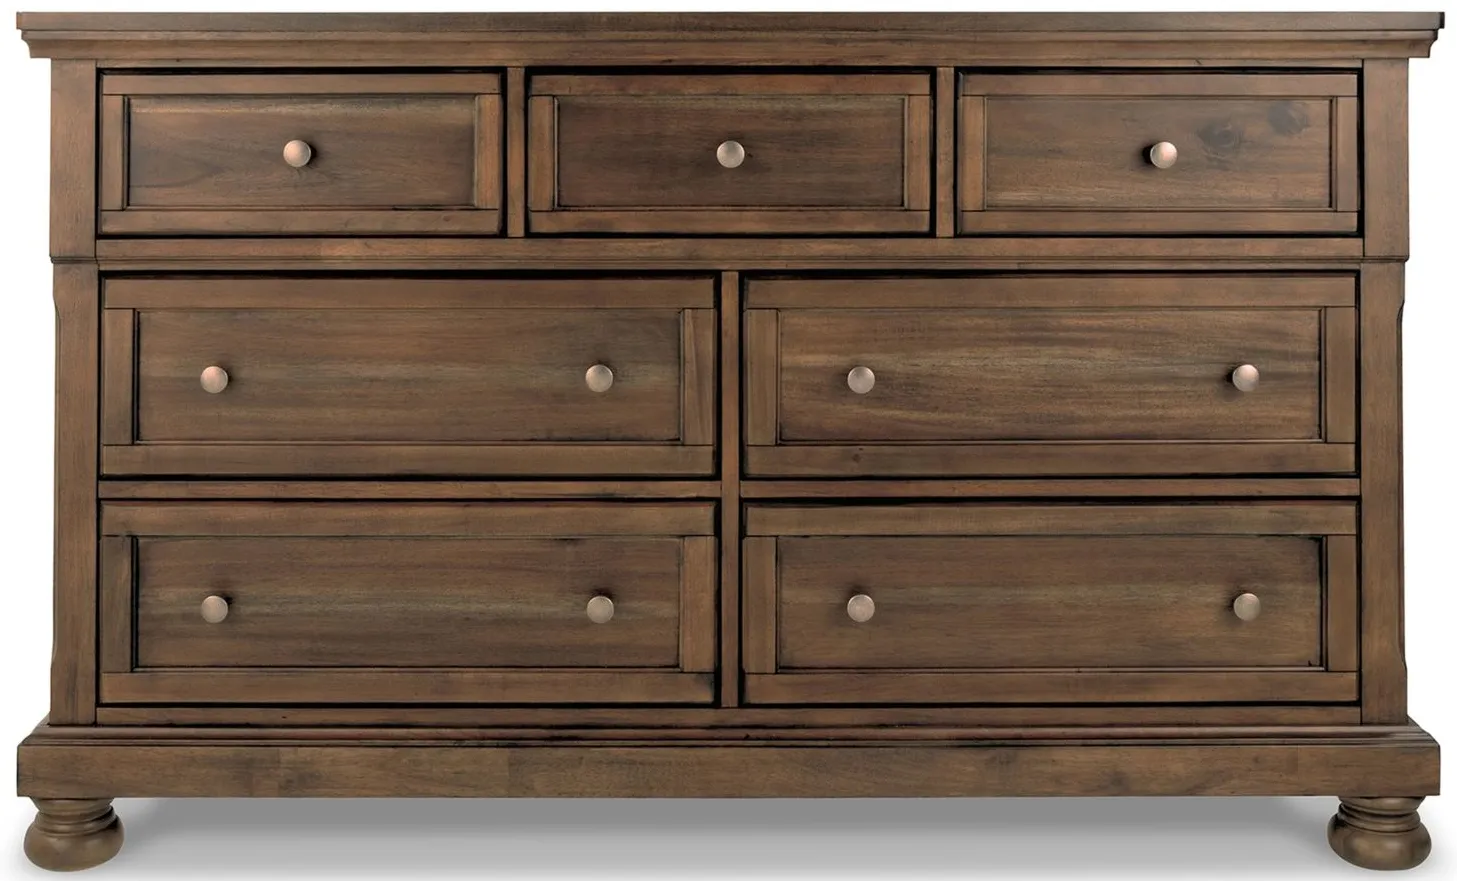 Flynnter Dresser in Medium Brown by Ashley Furniture